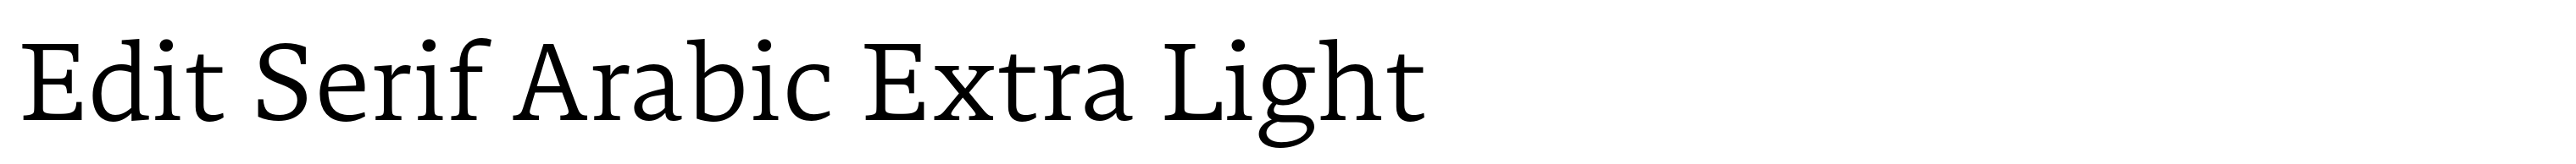 Edit Serif Arabic Extra Light